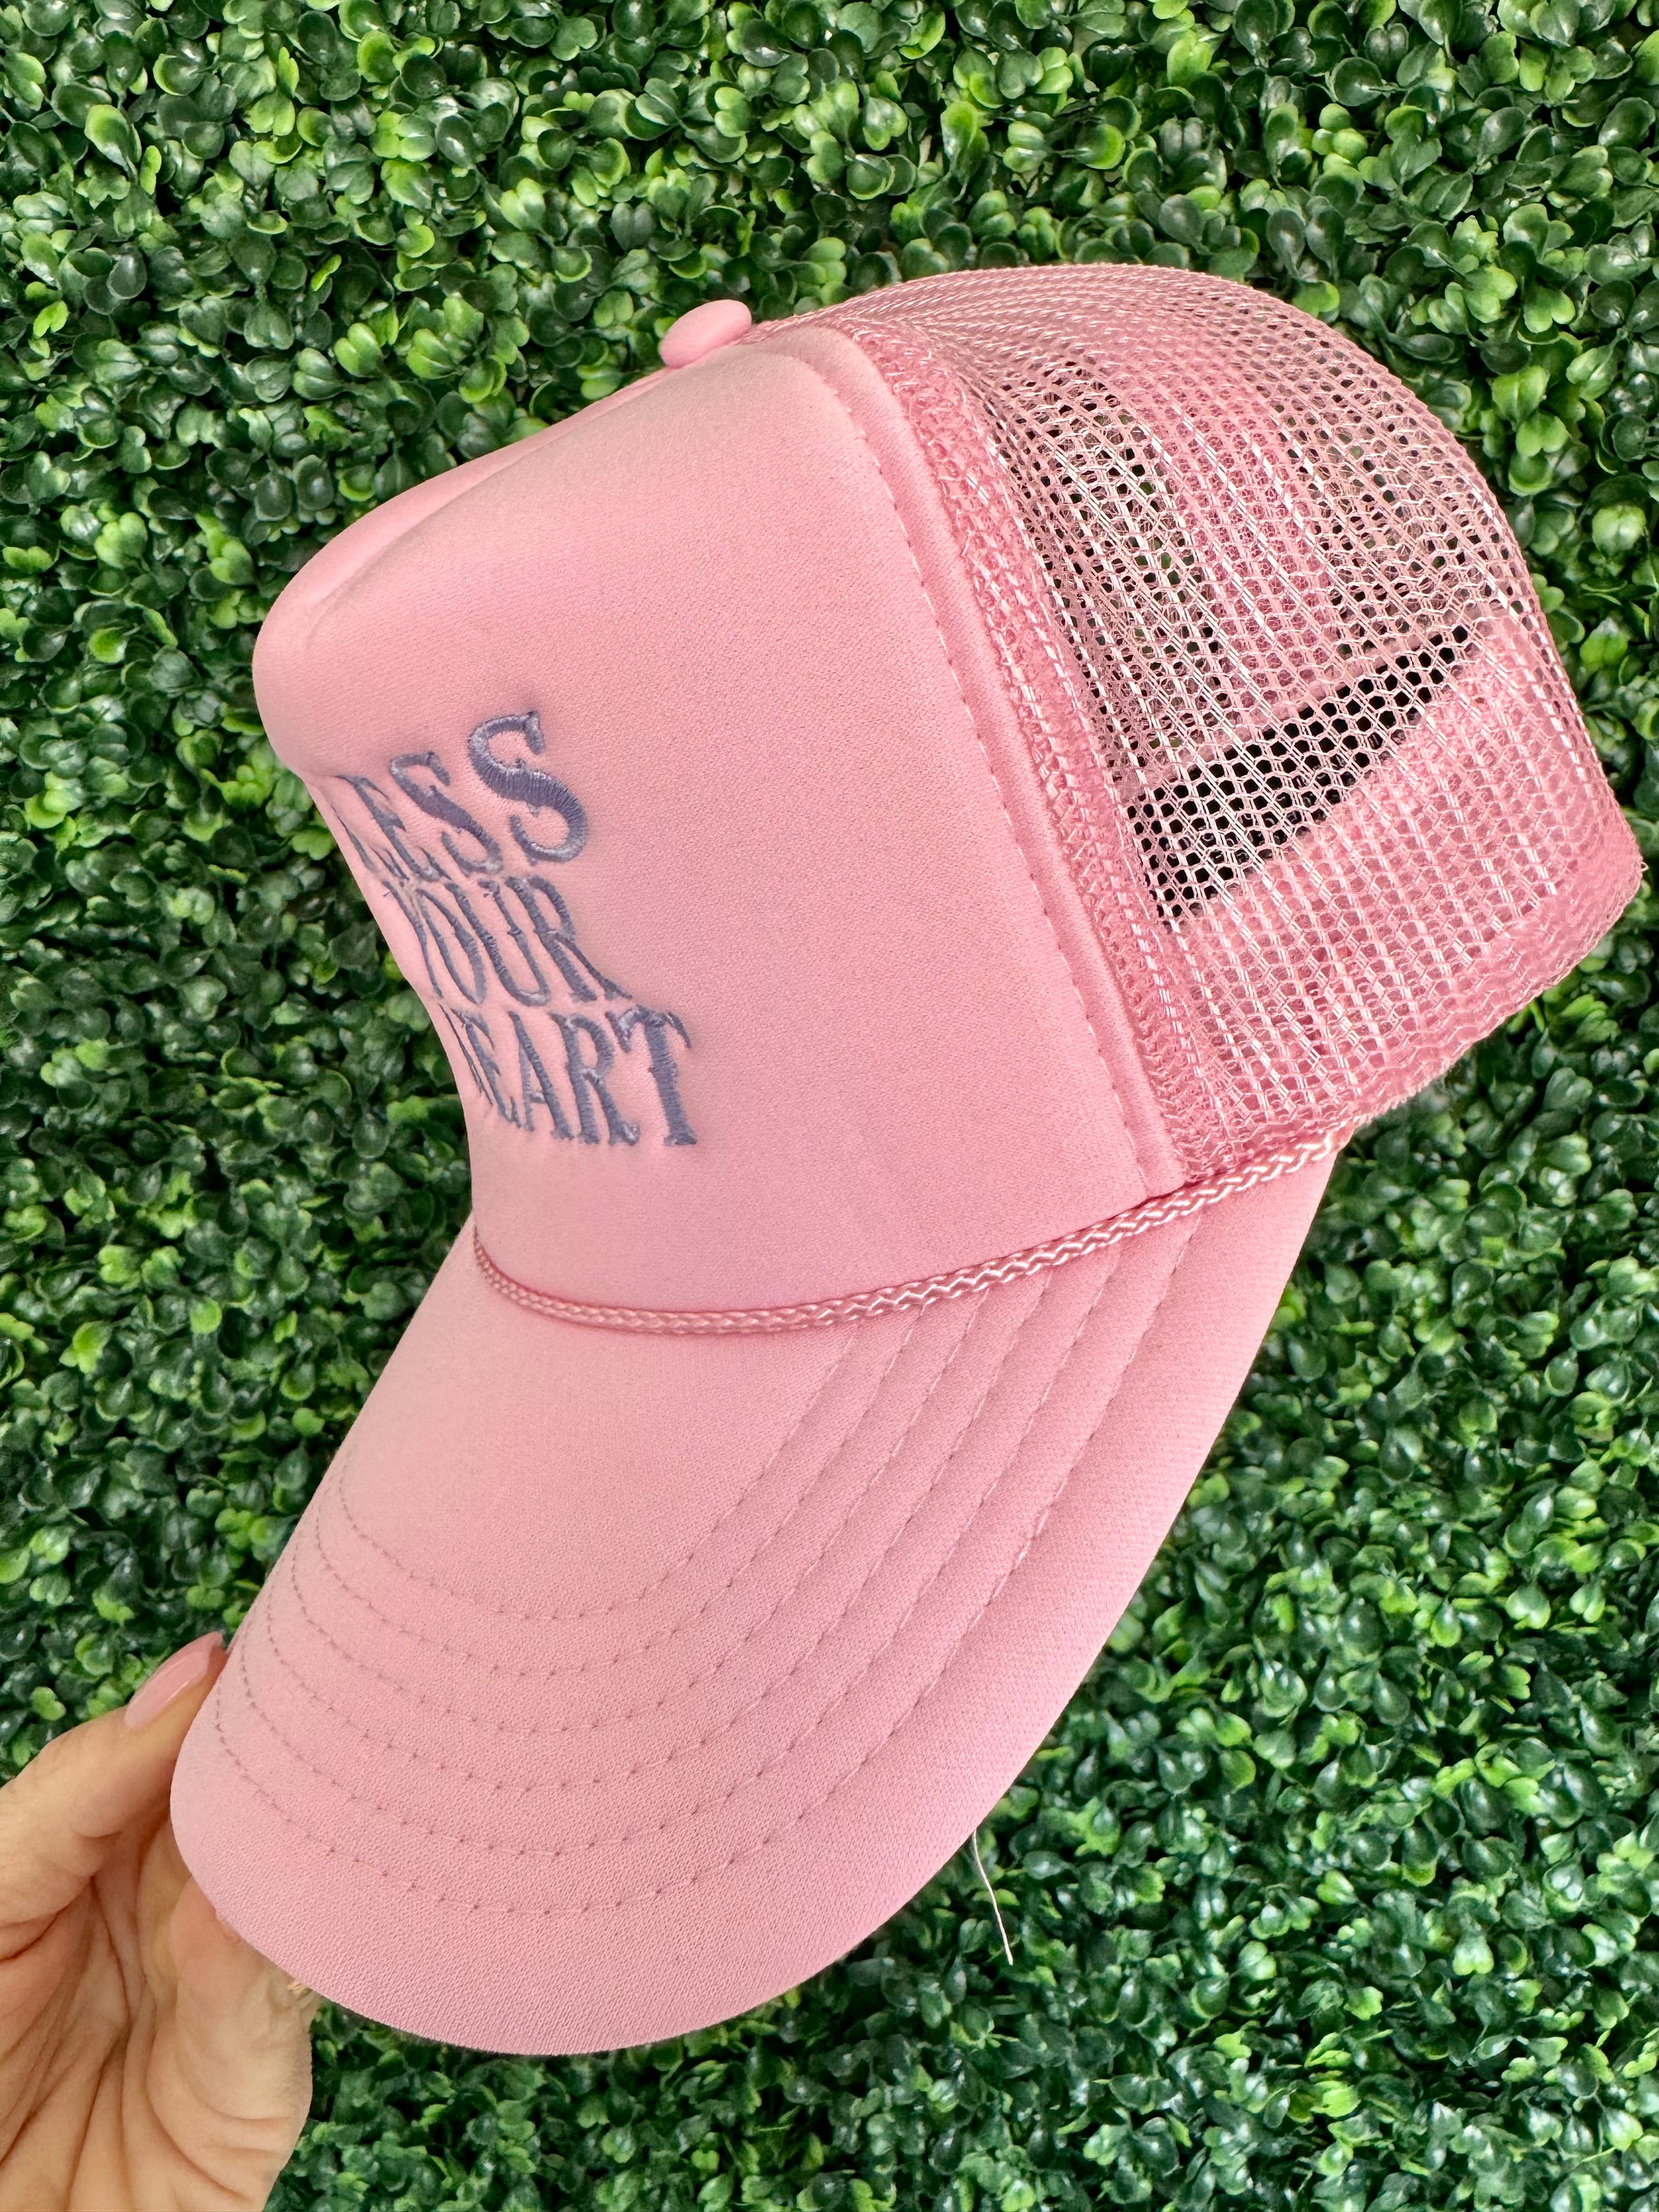 Bless Your Heart Pink Trucker Hat